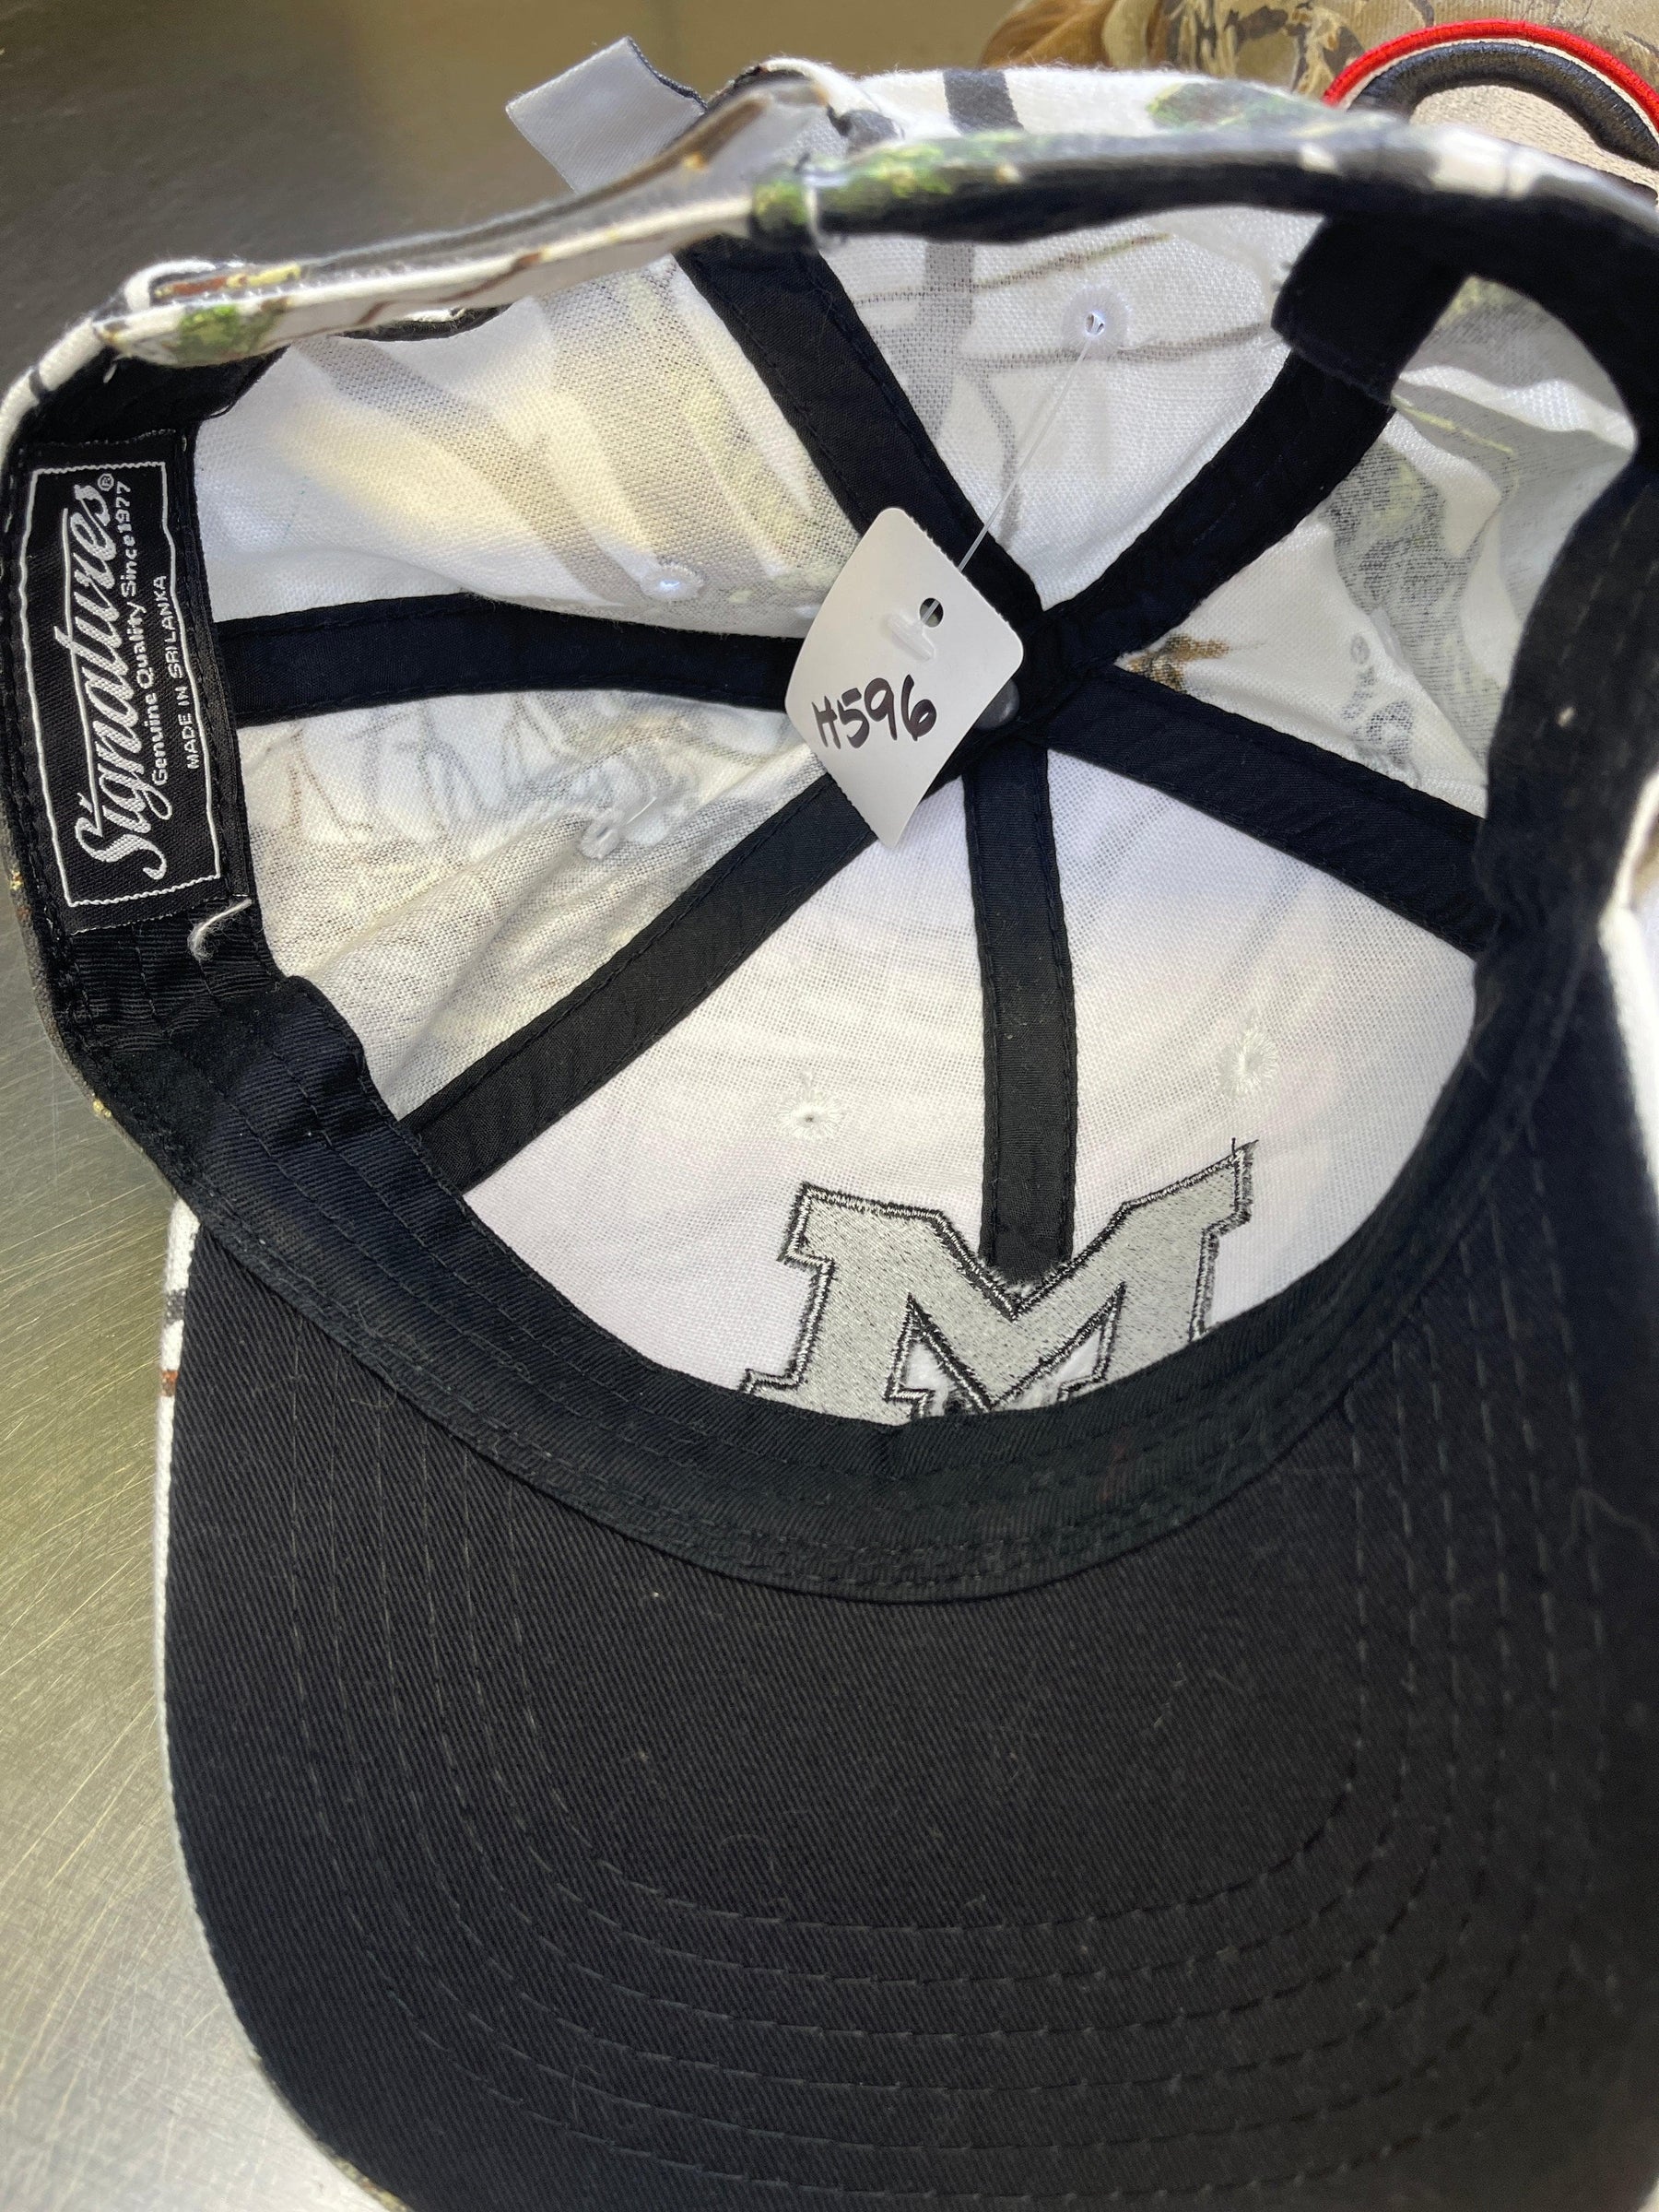 NCAA Michigan Wolverines Tree Pattern Baseball Hat/Cap OSFM NWT